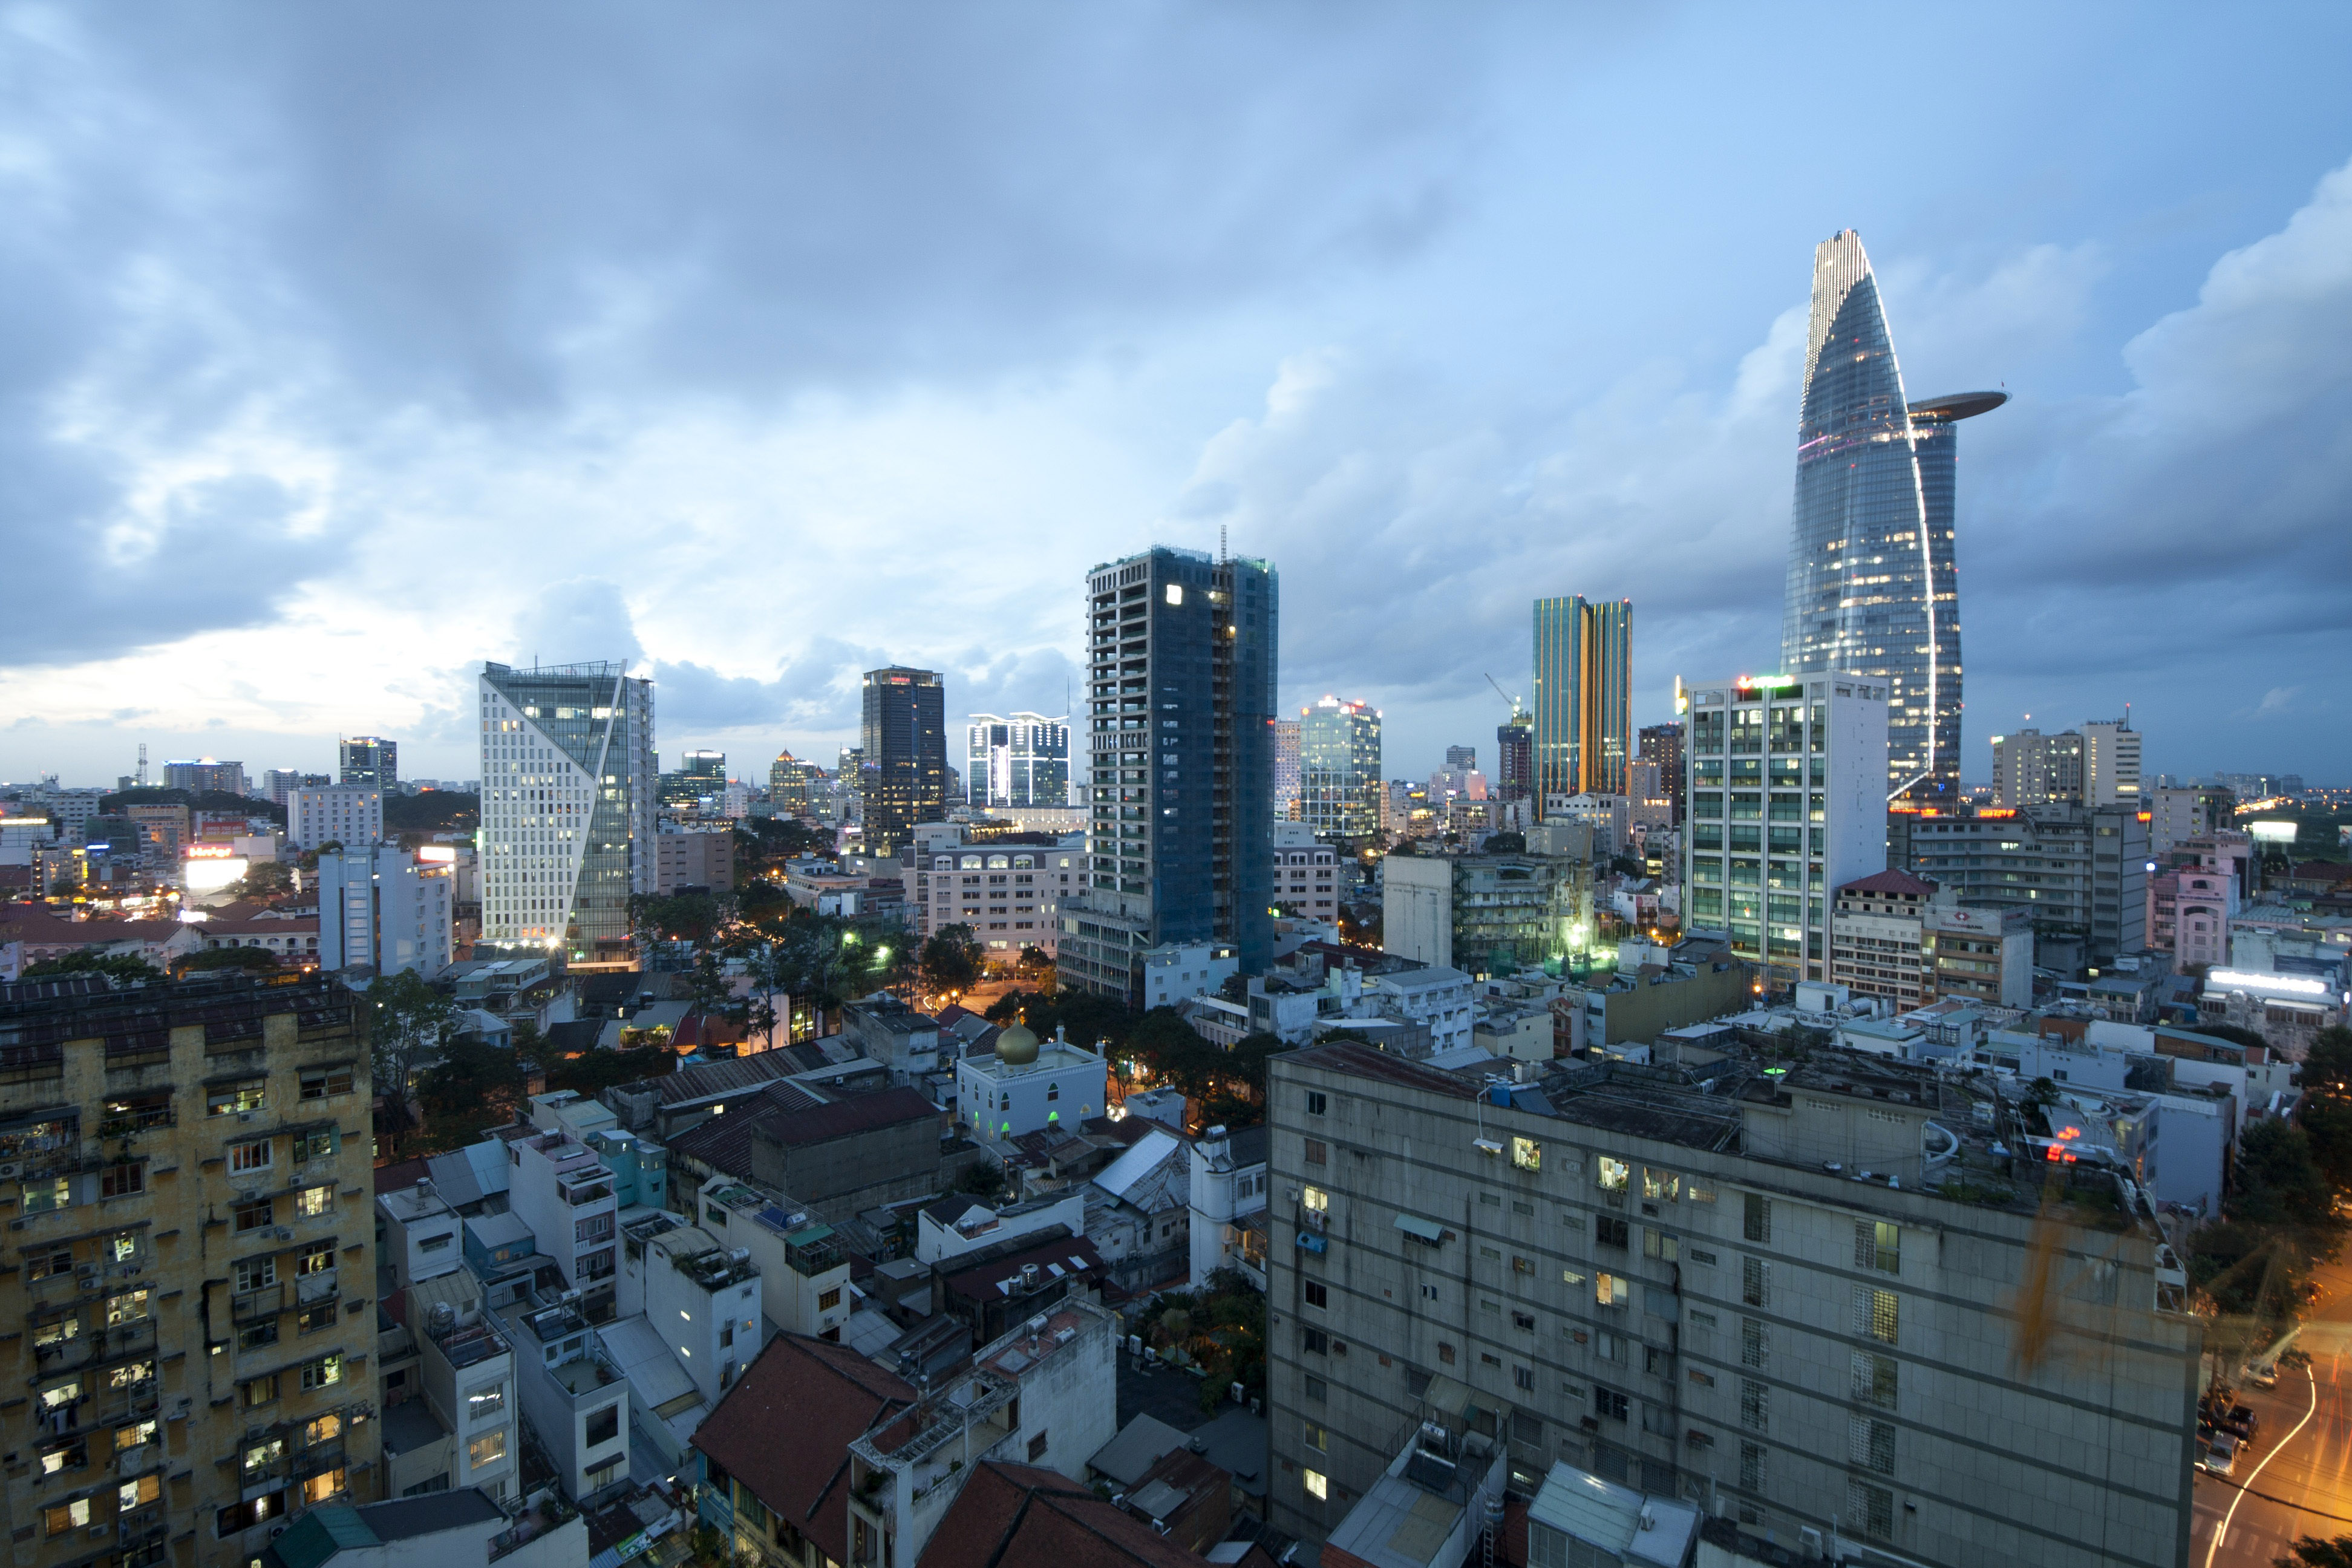 Ho Chi Minh v Saigon: Why Vietnam's Biggest City Two Names